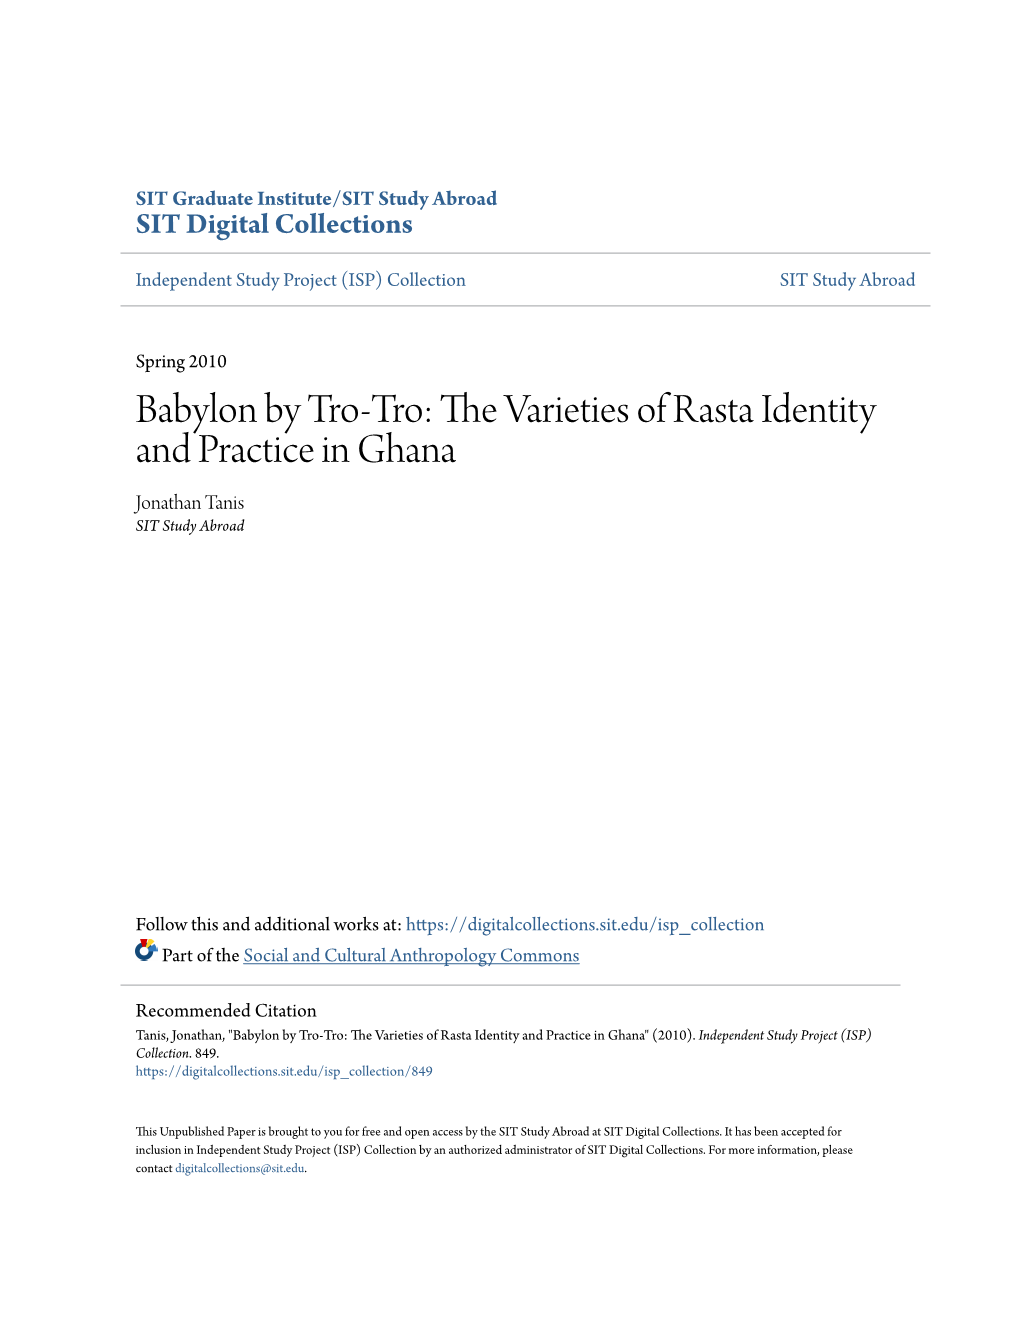 Babylon by Tro-Tro: the Varieties of Rasta Identity and Practice in Ghana